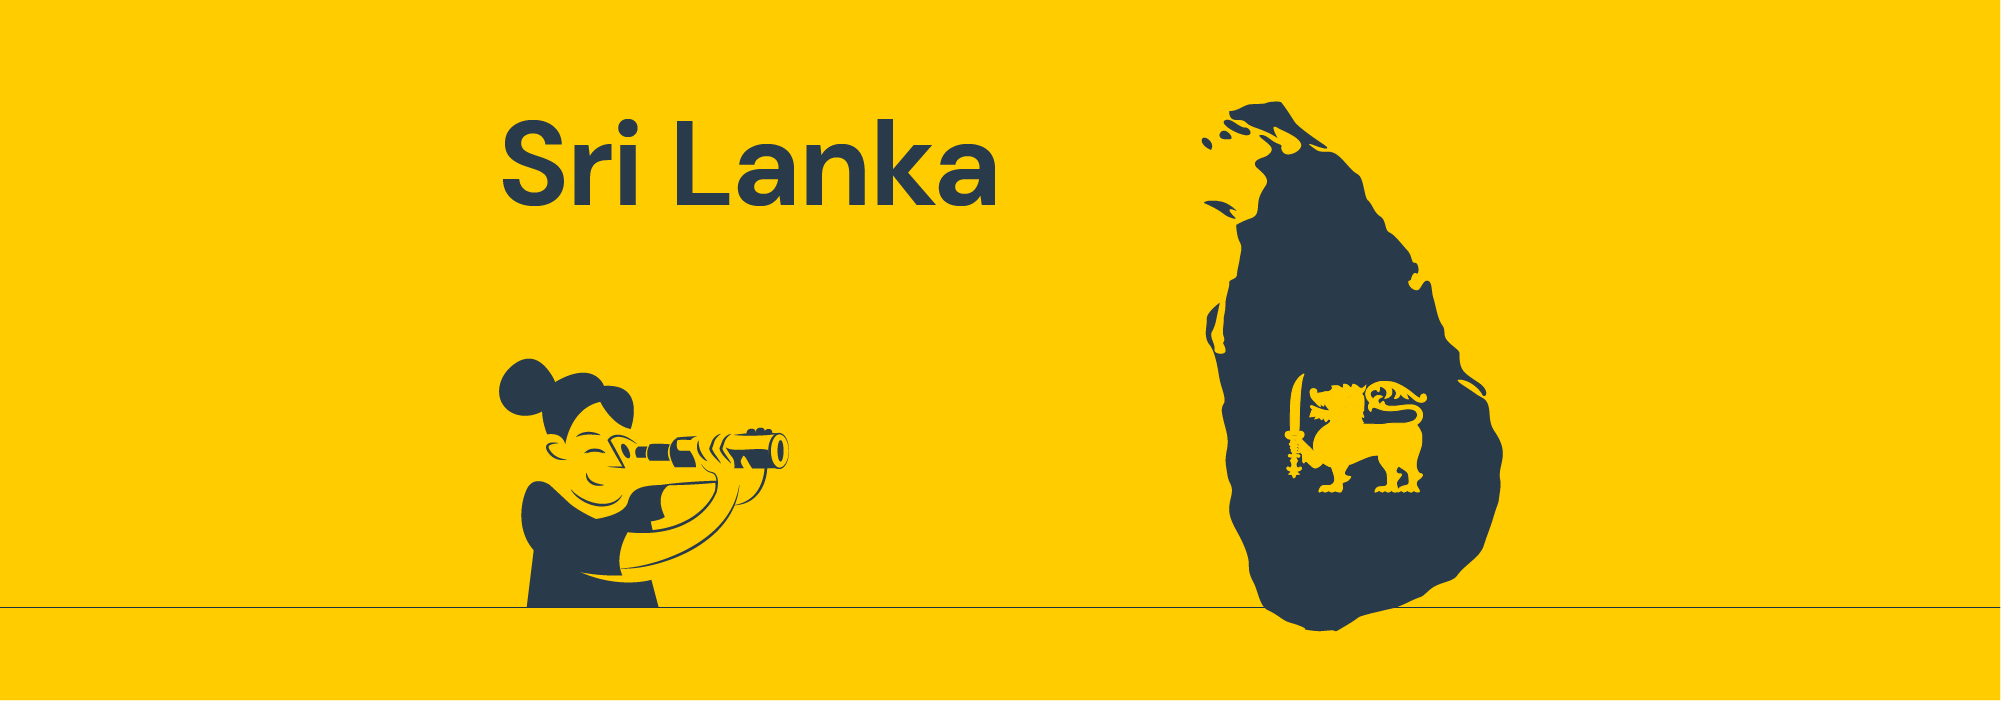 Sri Lanka as emerging international student source market